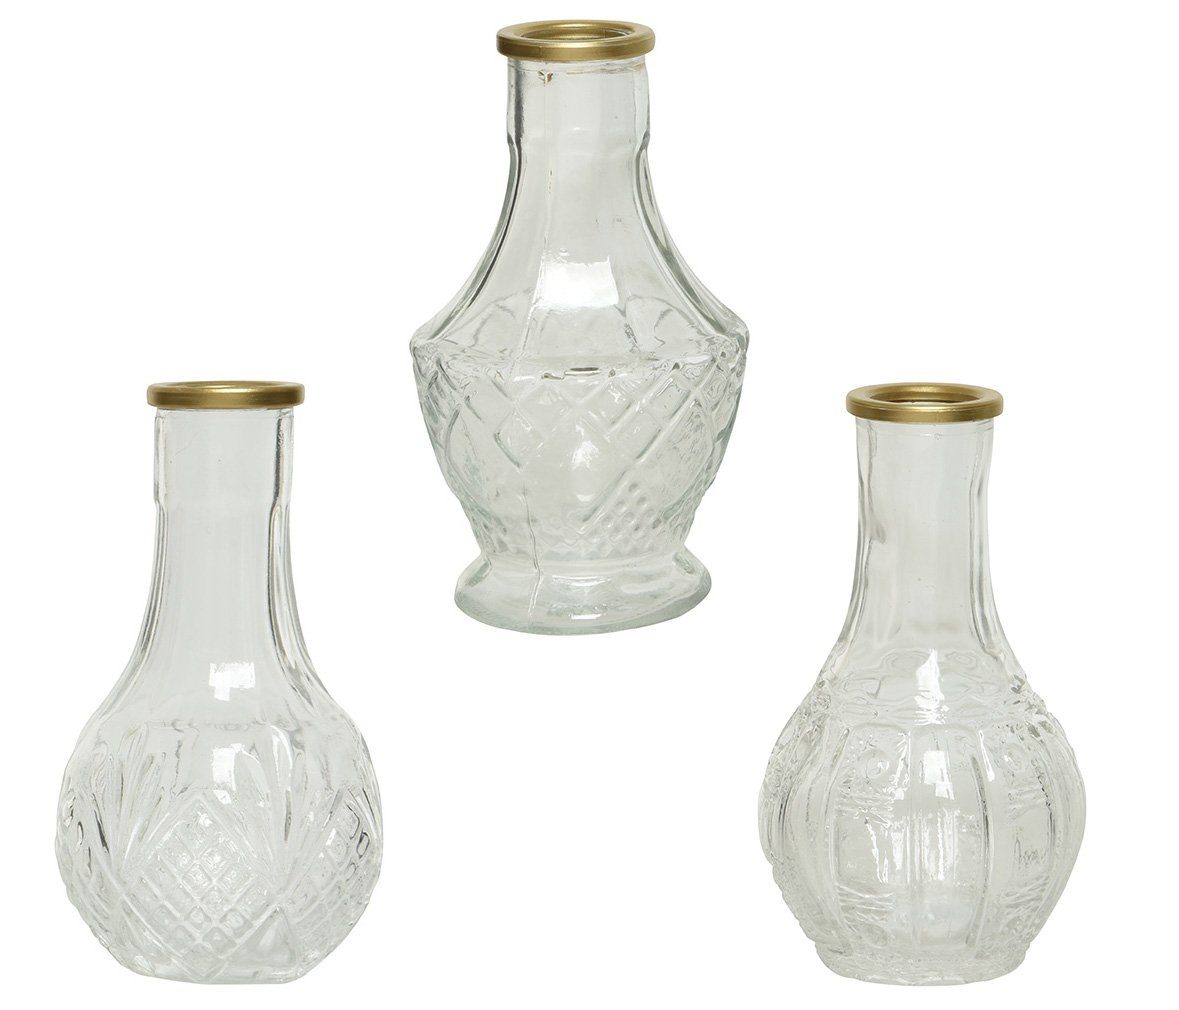 Decoris season decorations Dekovase, Vase Glas mit Goldrand 11.5cm, 1 Stück sortiert